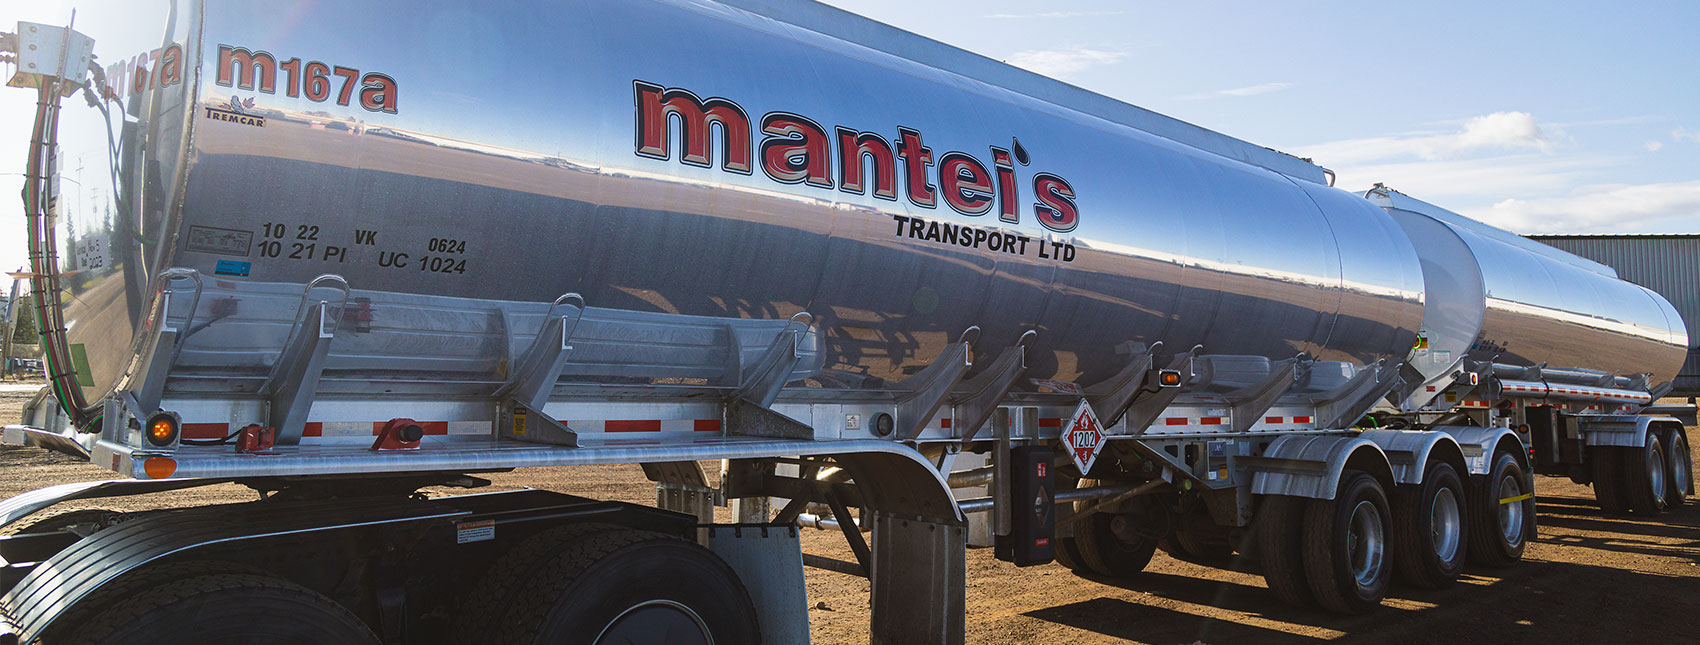 Mantei’s Transport Ltd. B-train tanker trailer